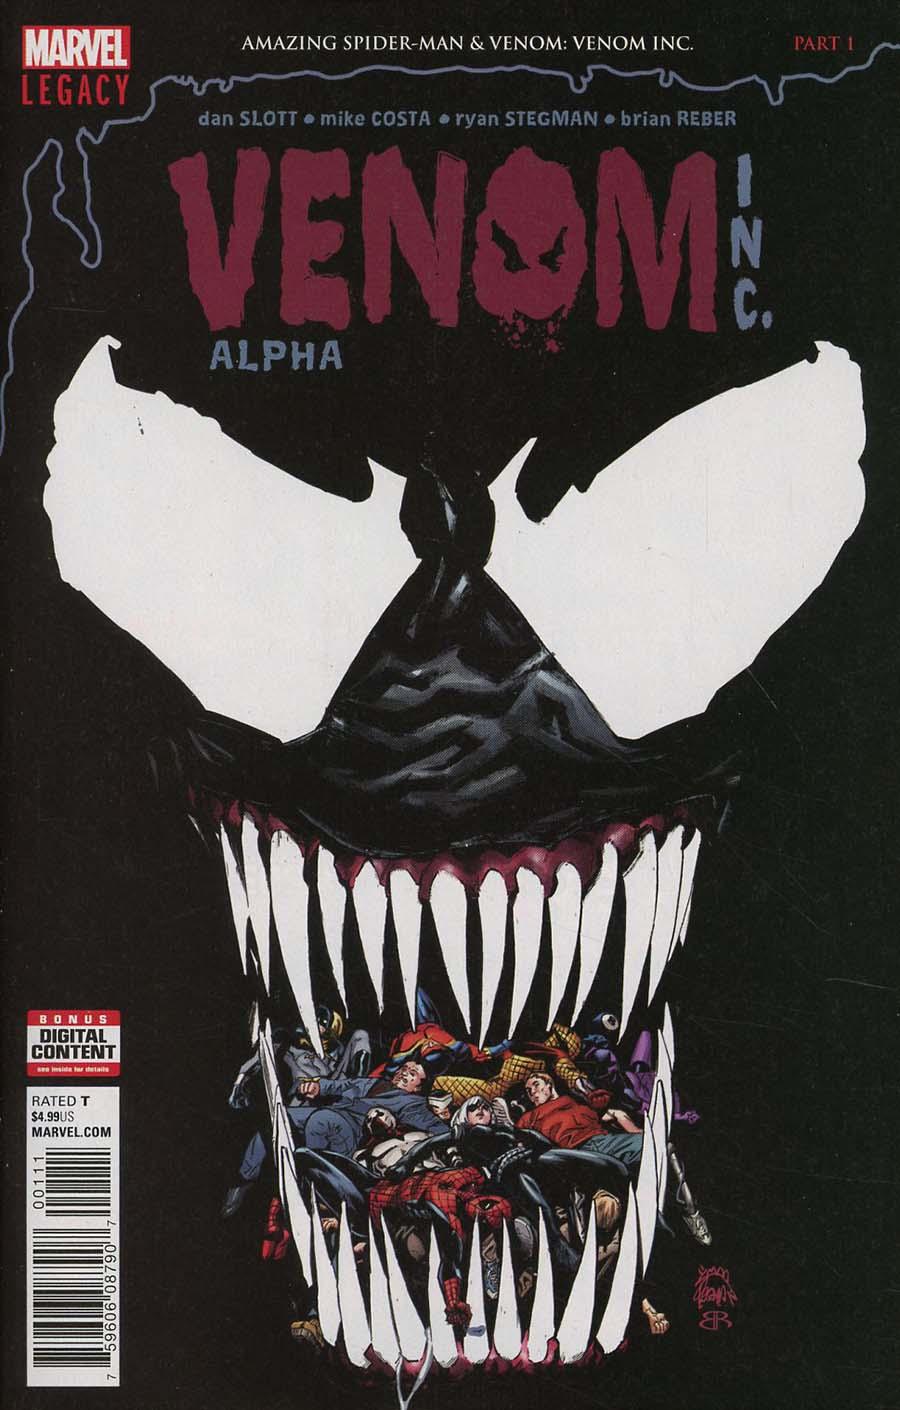 Amazing Spider-Man Venom Venom Inc Alpha Vol. 1 #1